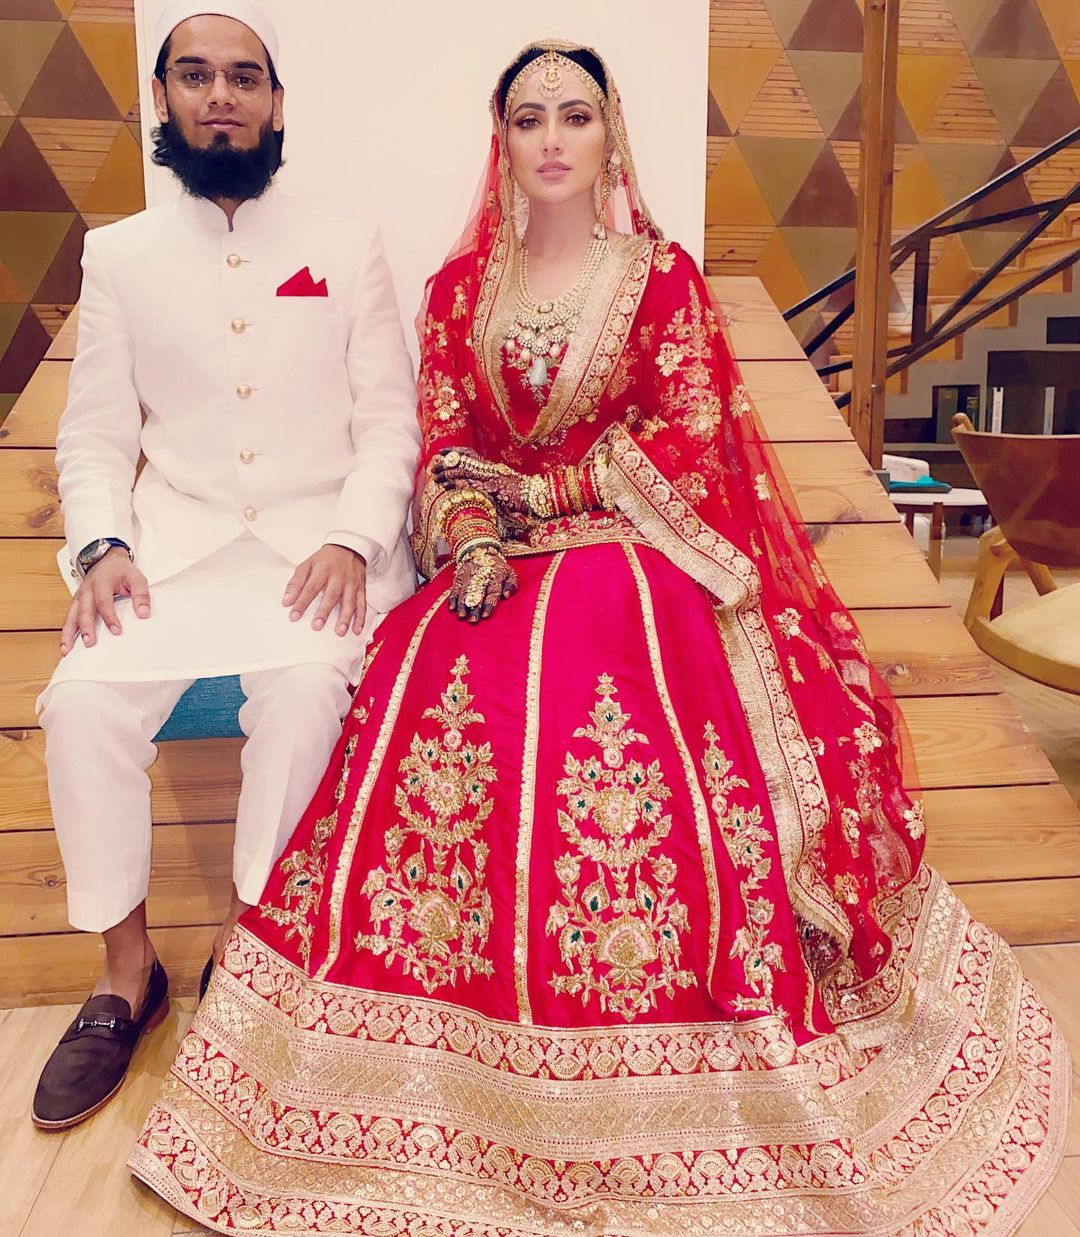 Mufti Anas Sayed and Sana Khan on their wedding day